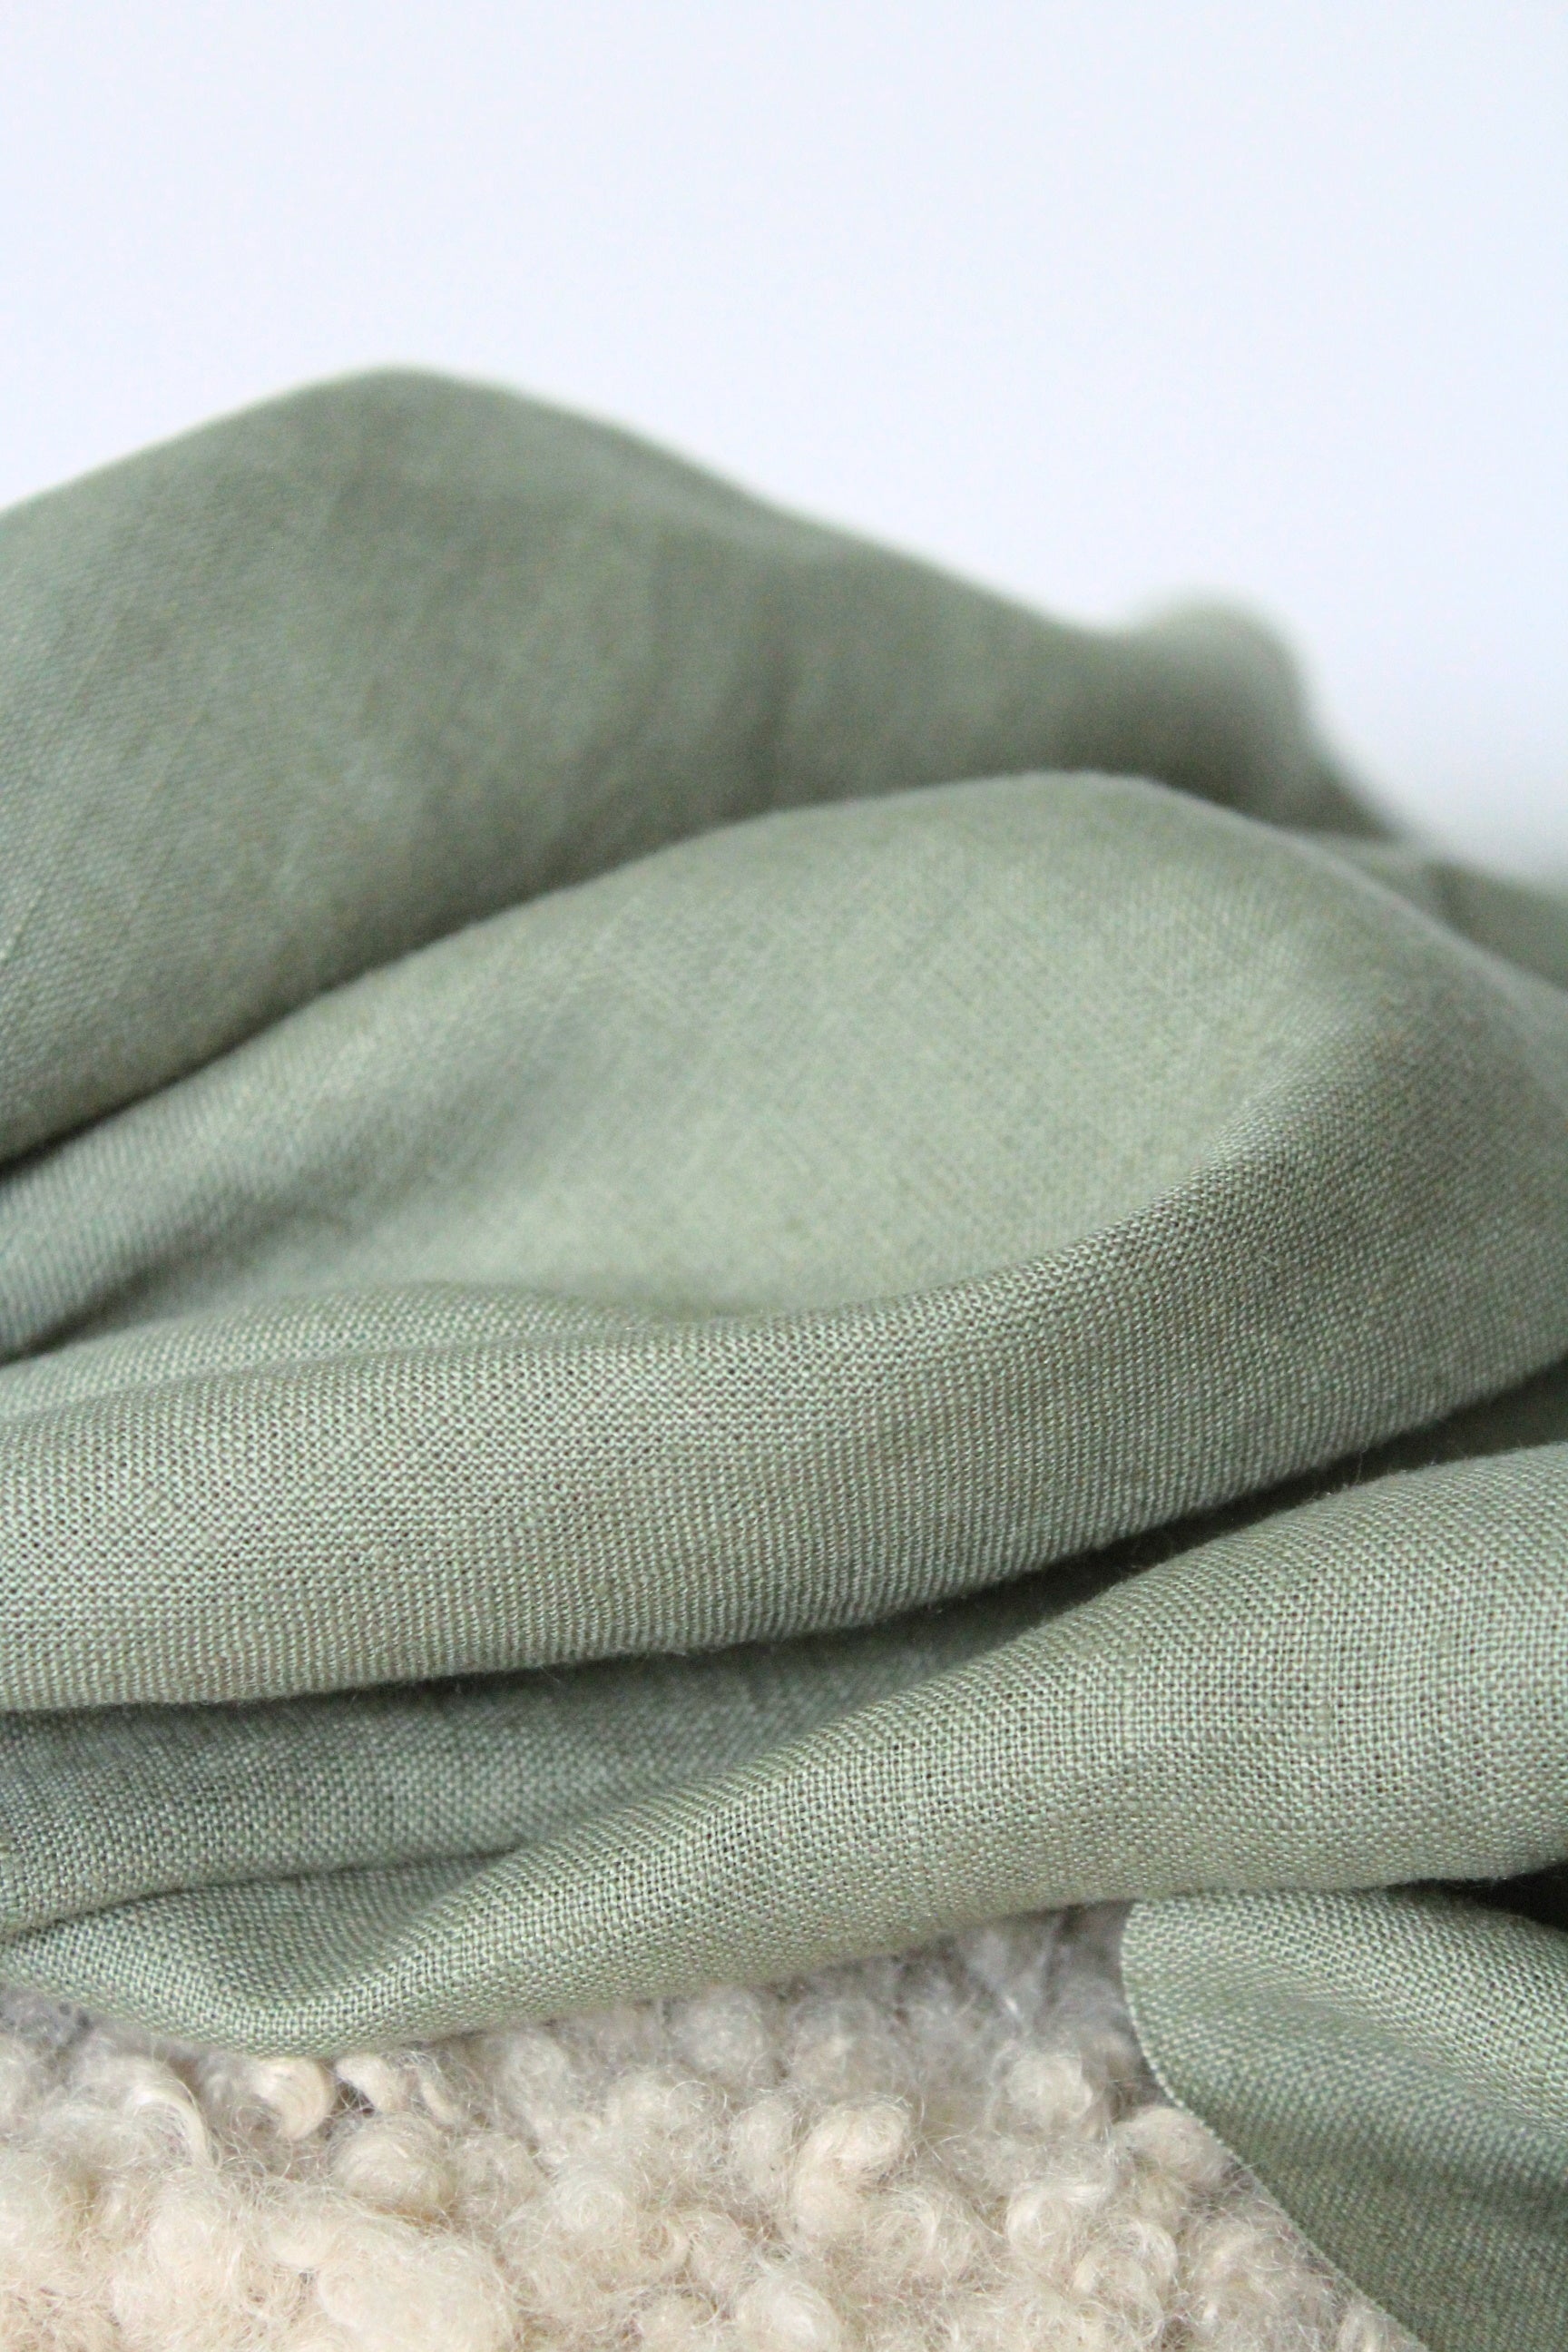 Siena Sage Linen Fabric - AVLEN